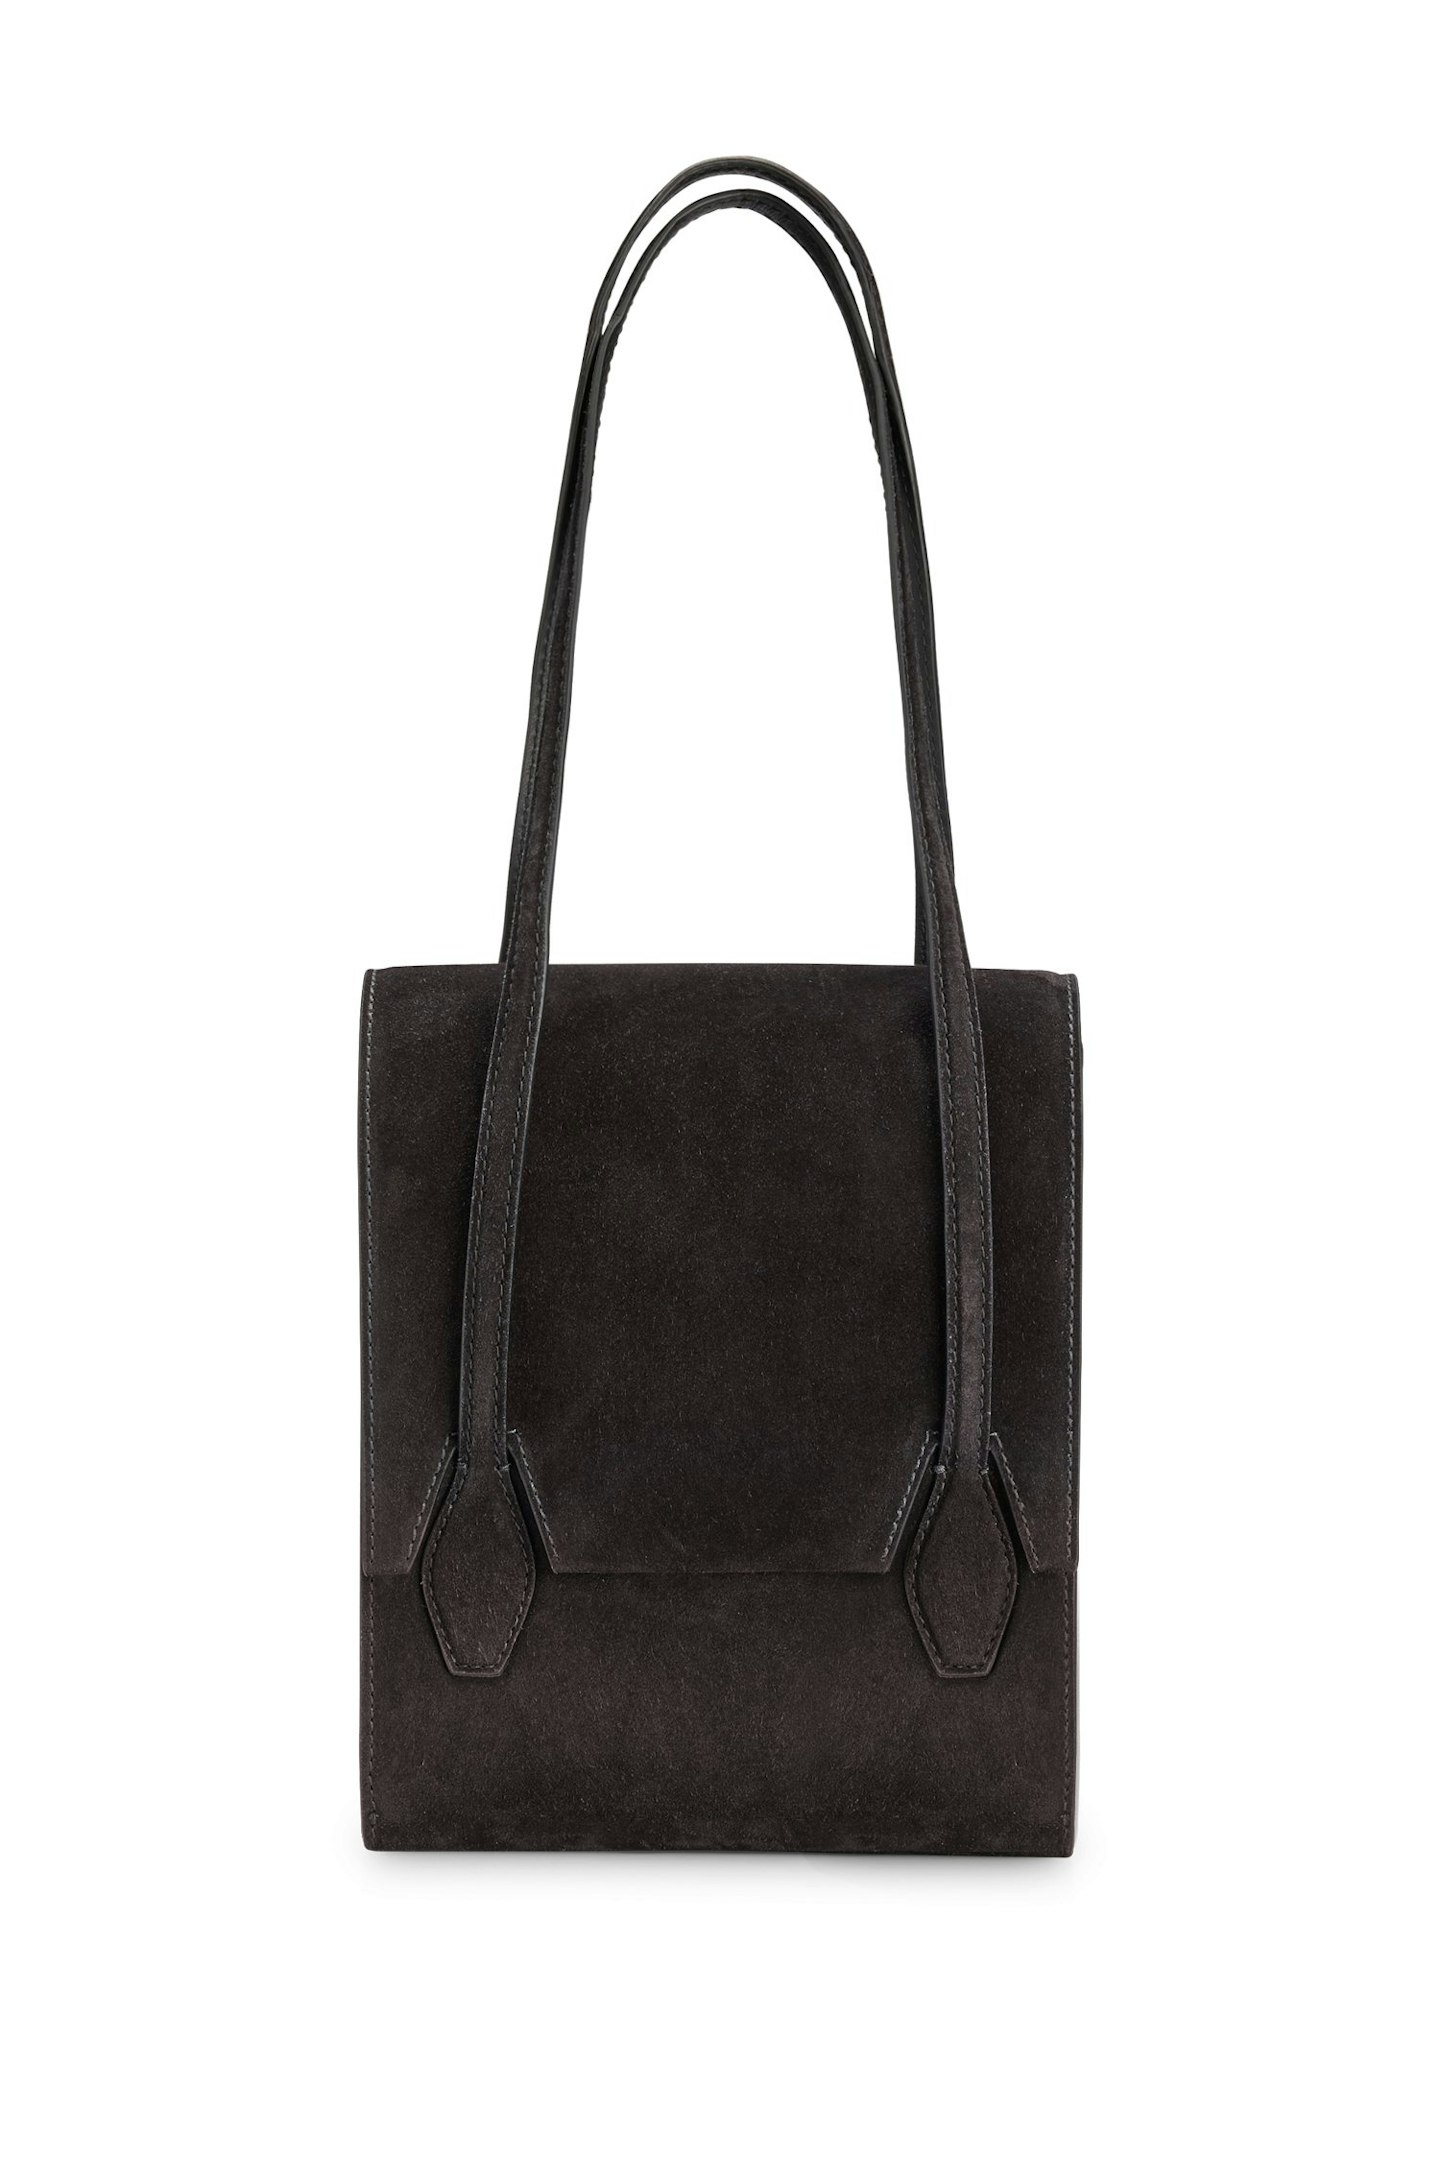 Shoulder Bag In Leather, £645 at BOSS